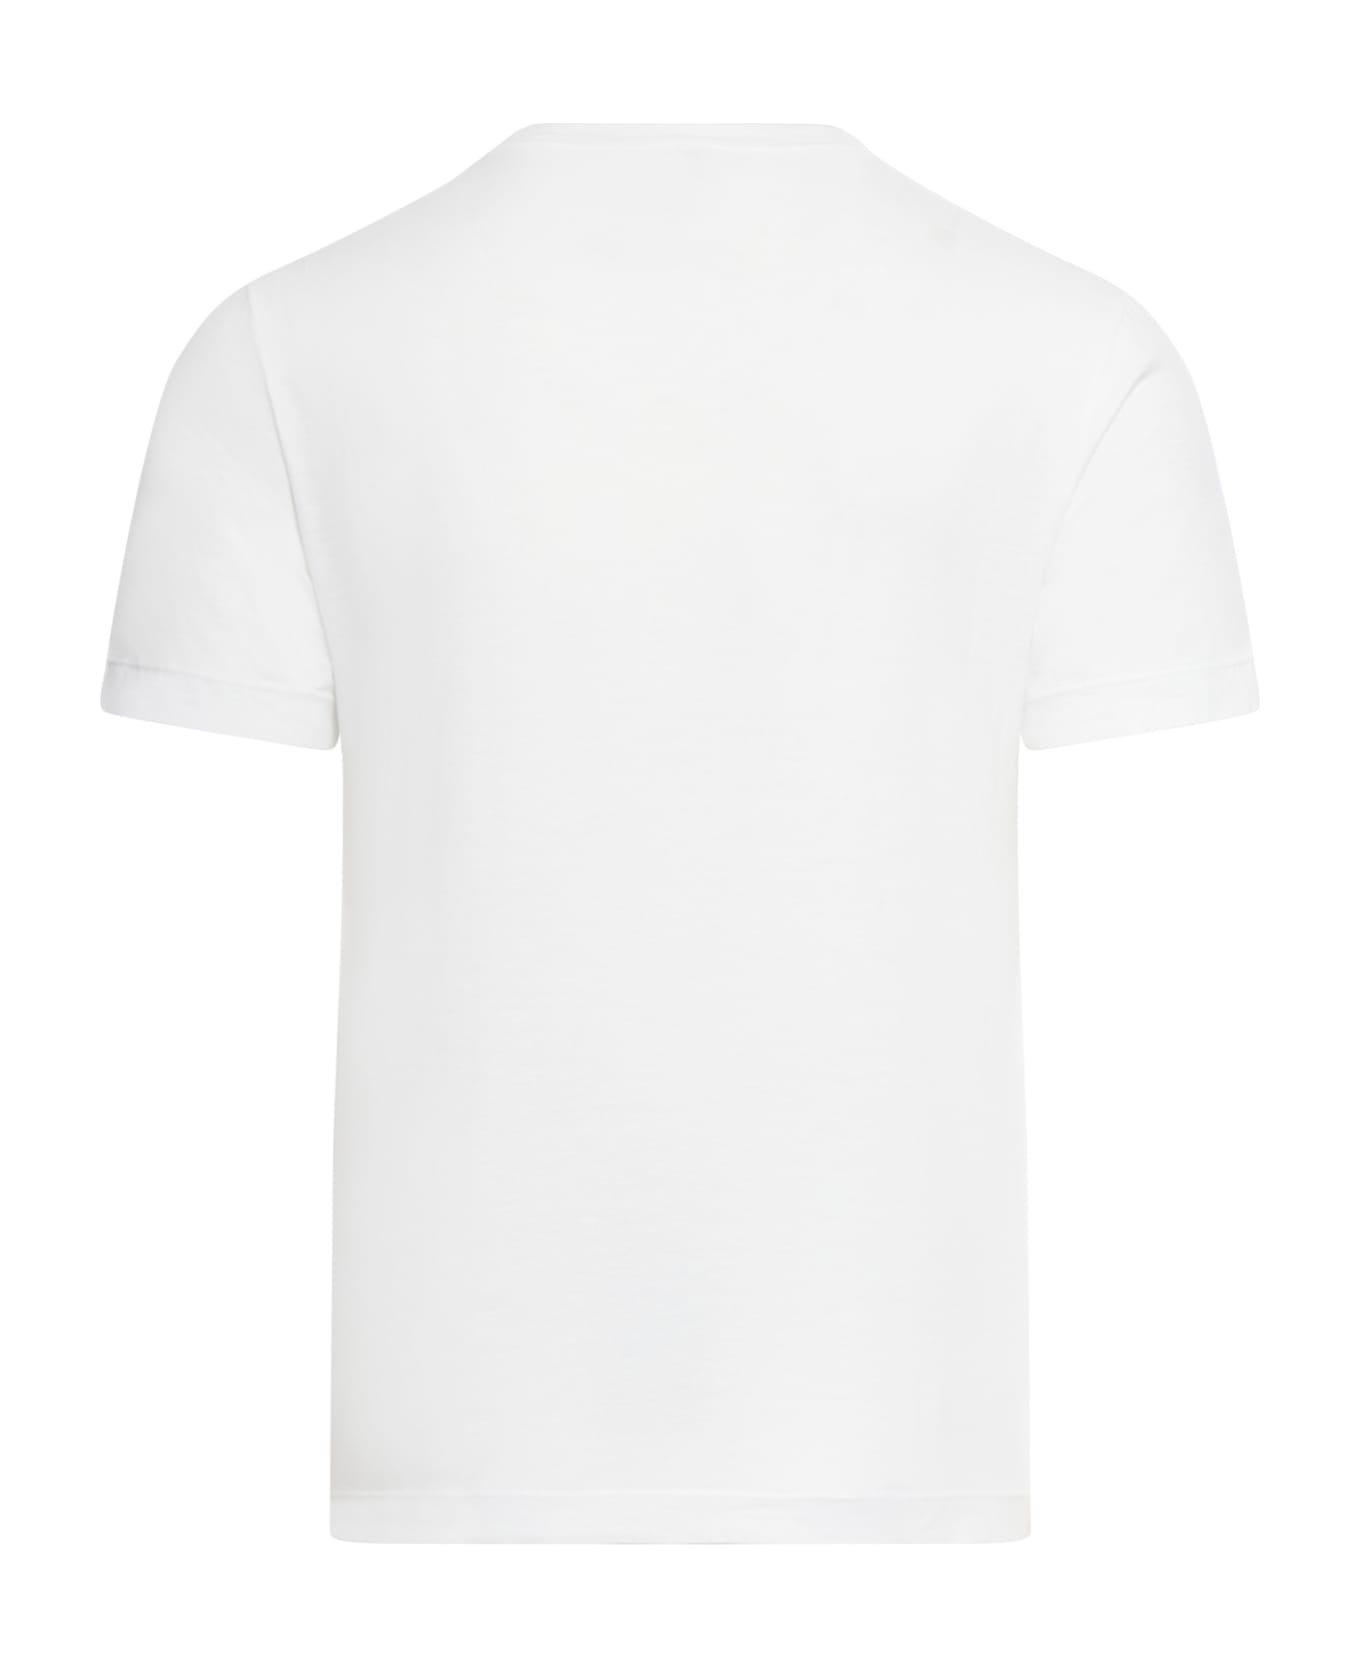 Transit Tshirt - Optical White